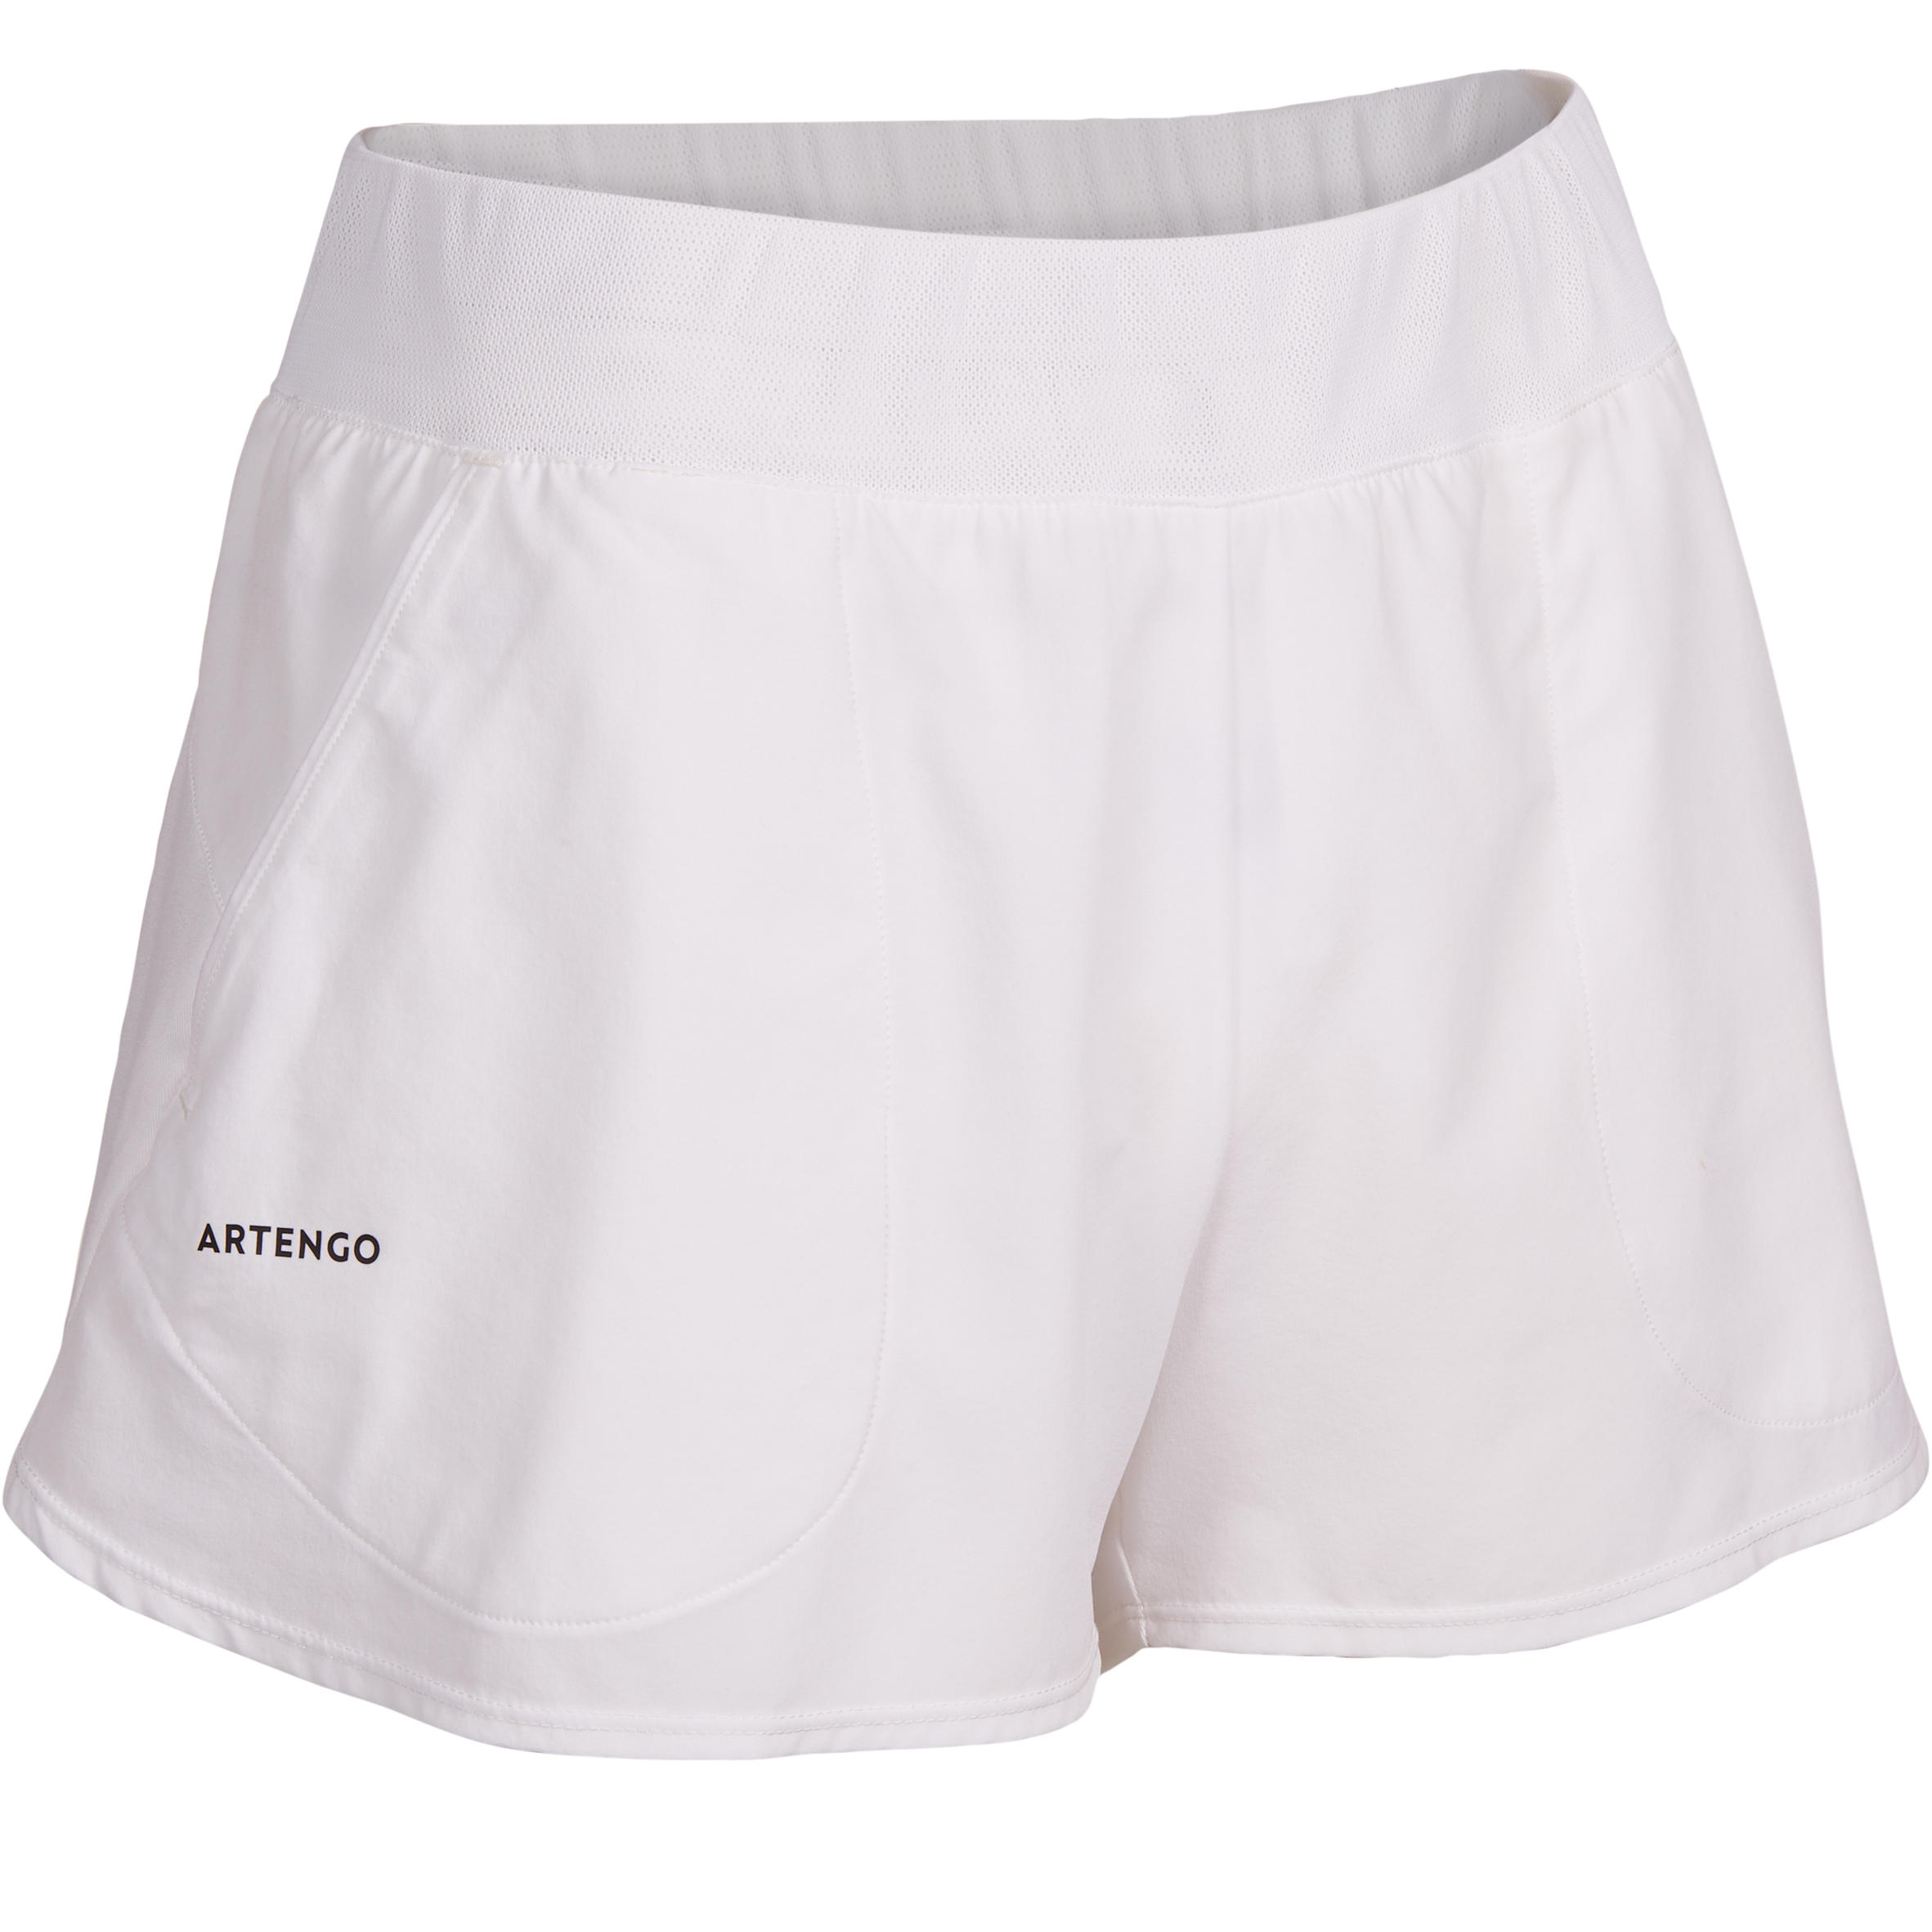 ARTENGO SH Soft 500 Women's Tennis Shorts - White